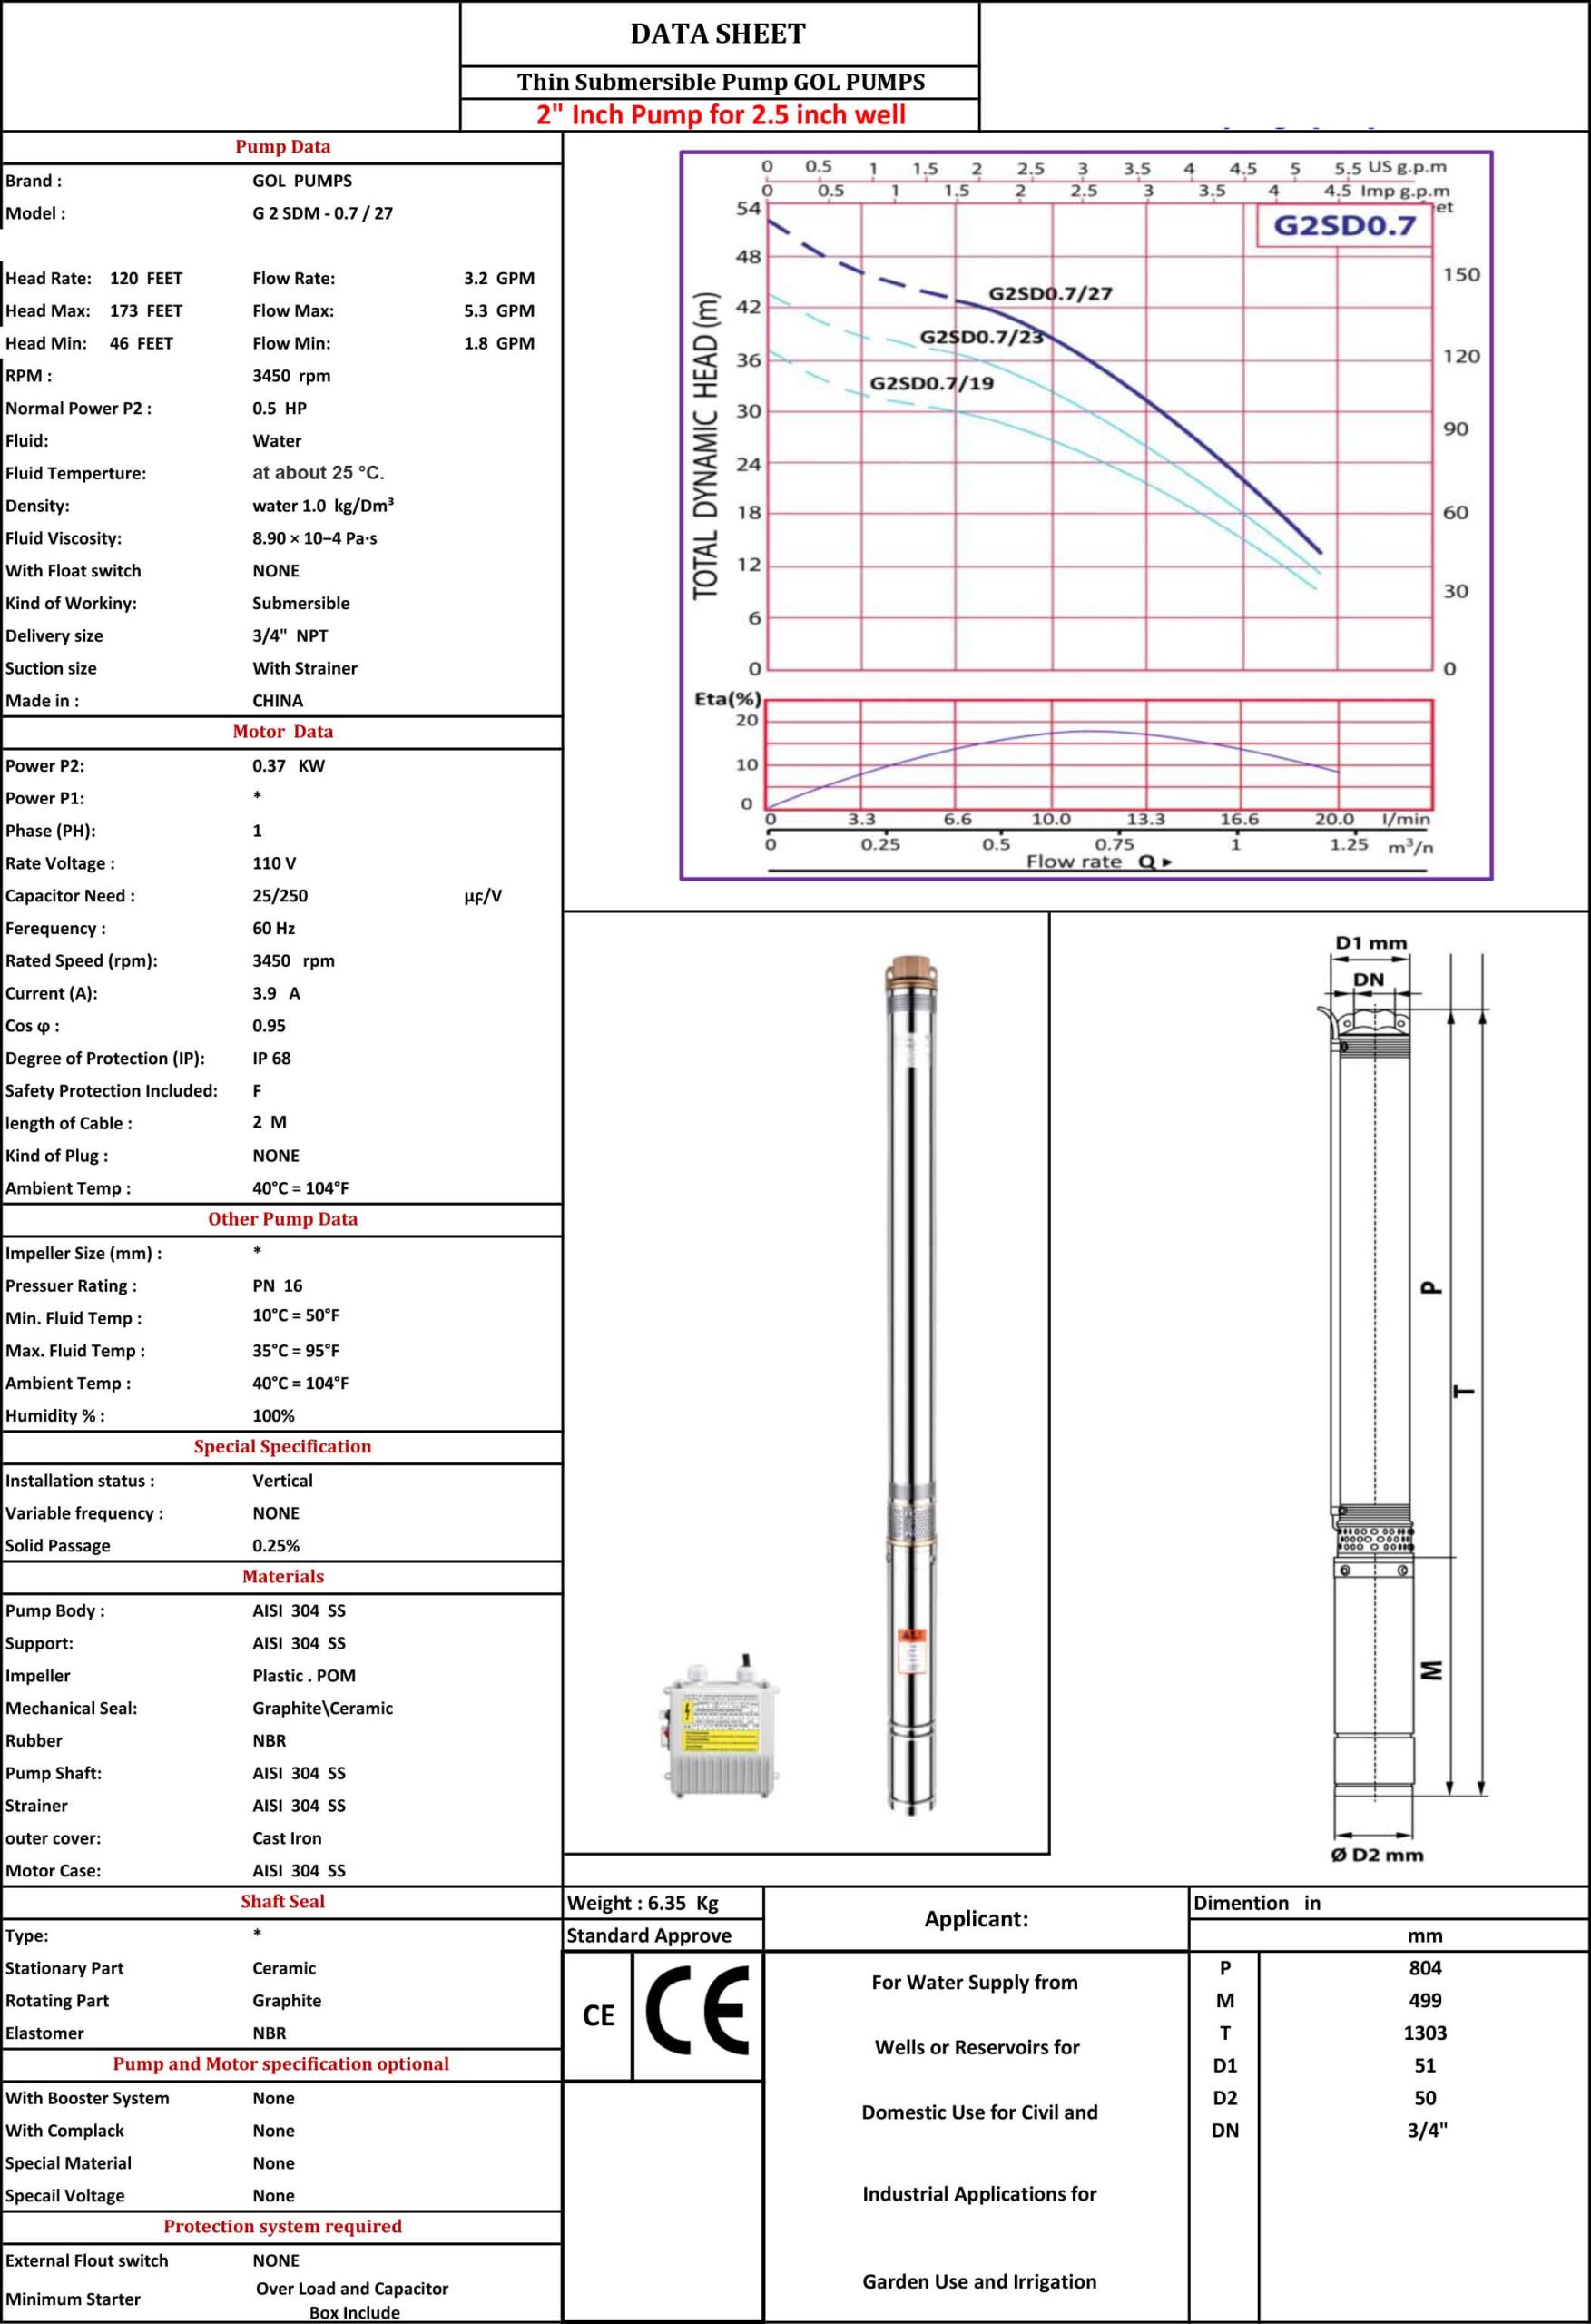 Thin Submersible Pump - Data Sheet